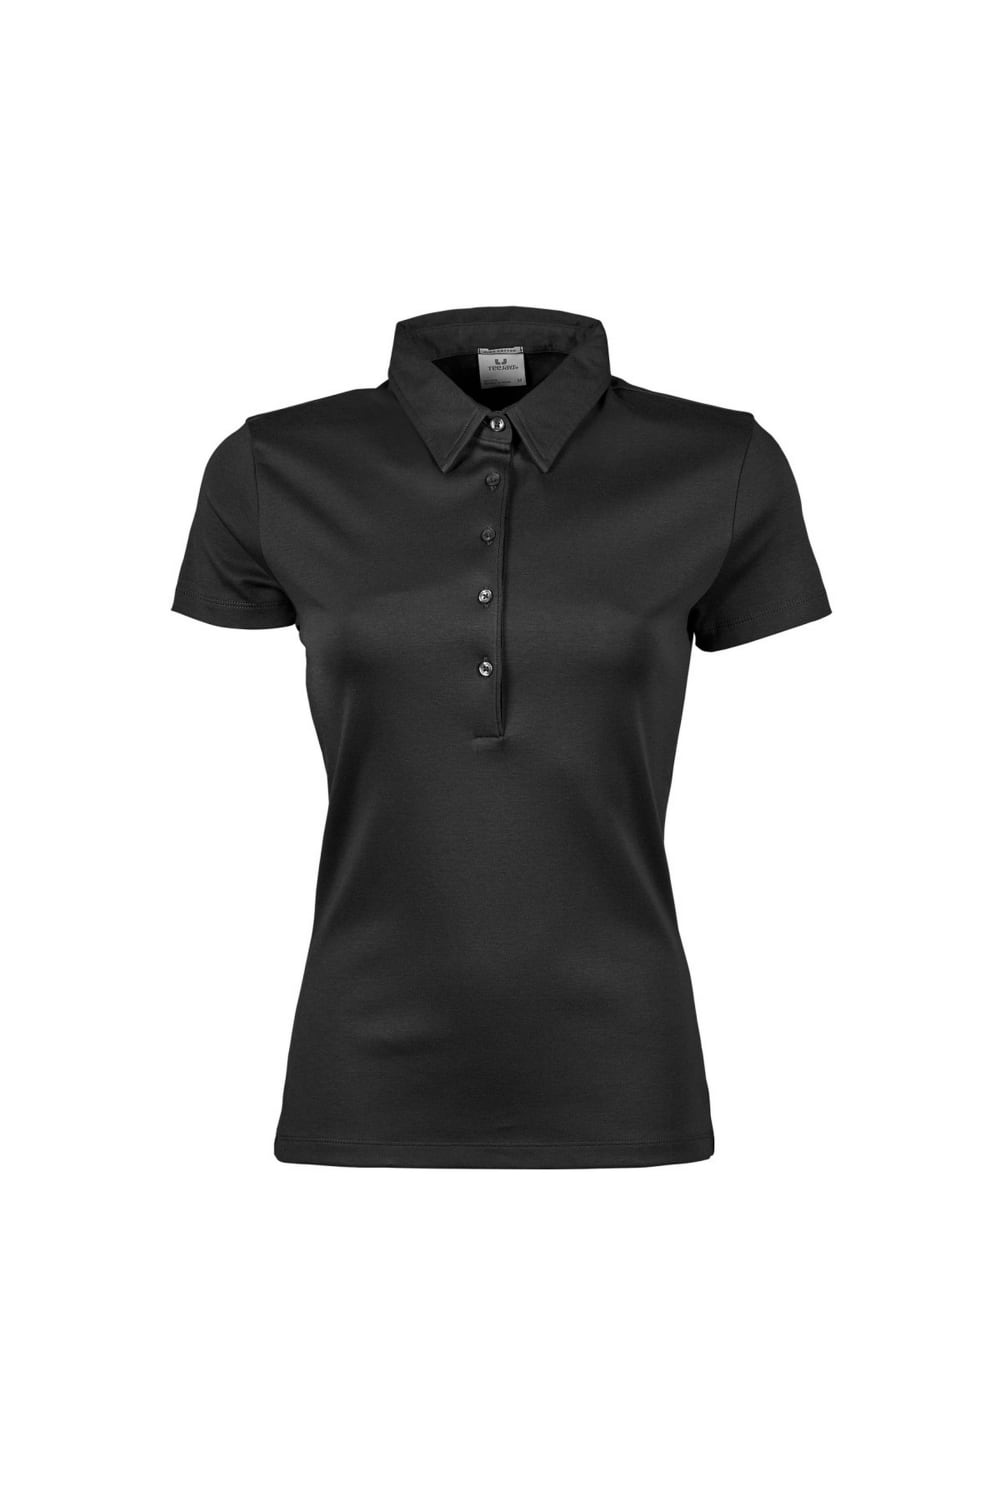 Tee Jays Womens/Ladies Pima Short Sleeve Cotton Polo Shirt (Black)